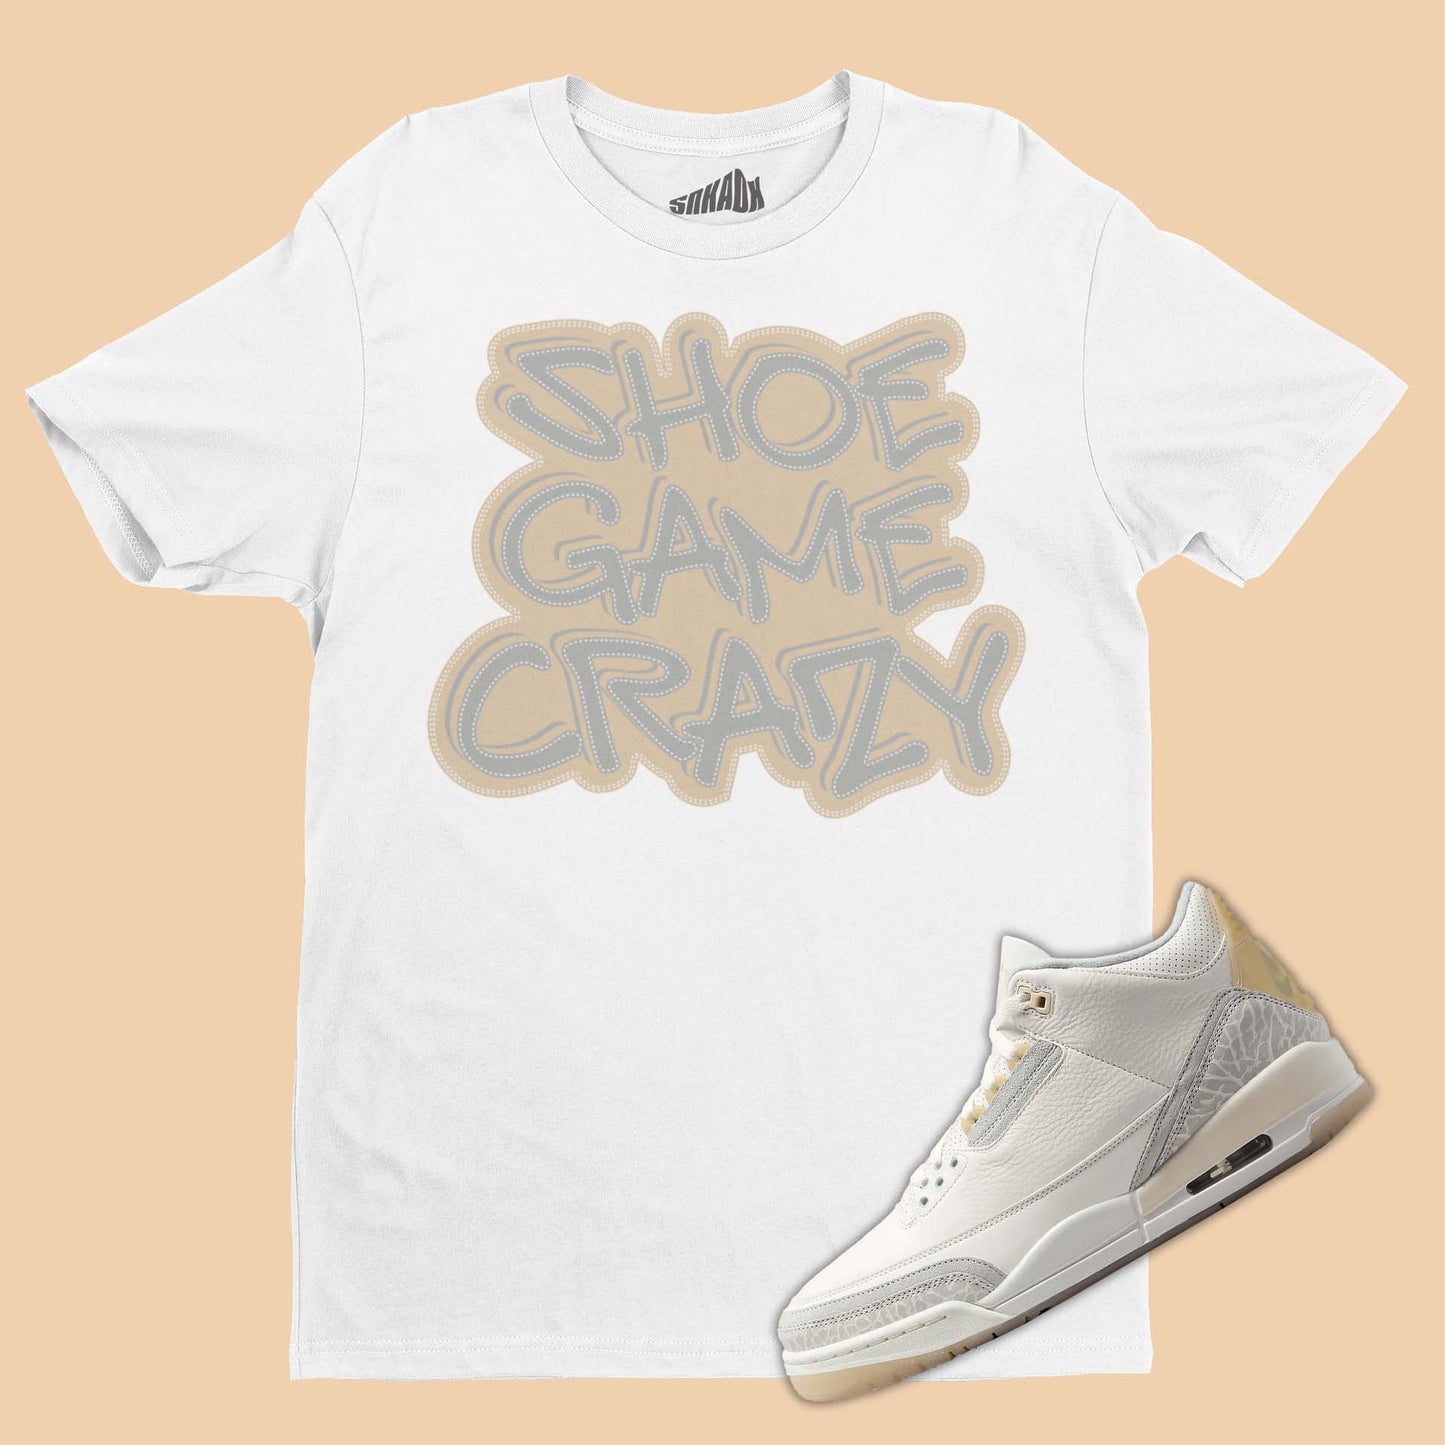 Shoe Game Crazy T-Shirt Matching Air Jordan 3 Craft Ivory